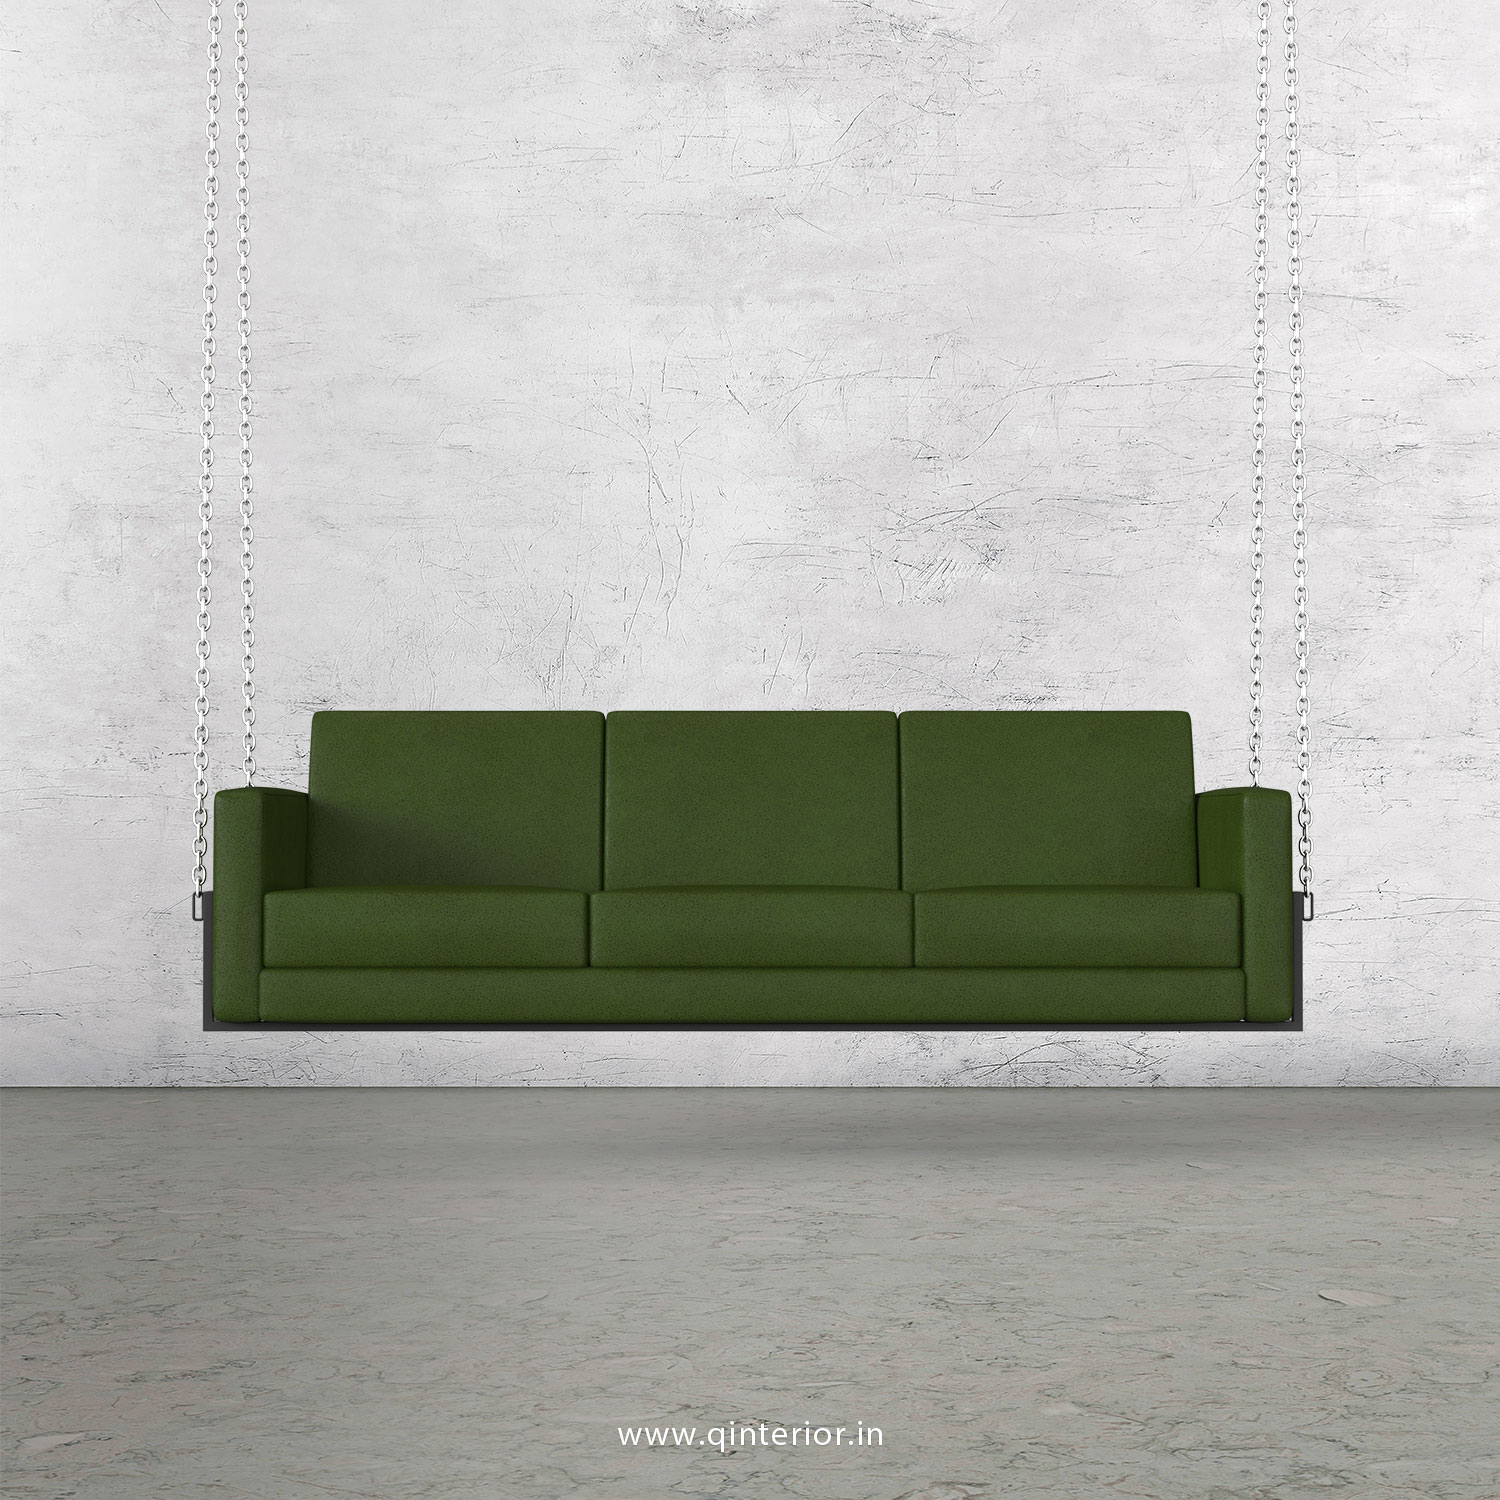 NIRVANA 3 Seater Swing Sofa in Fab Leather Fabric - SSF001 FL04